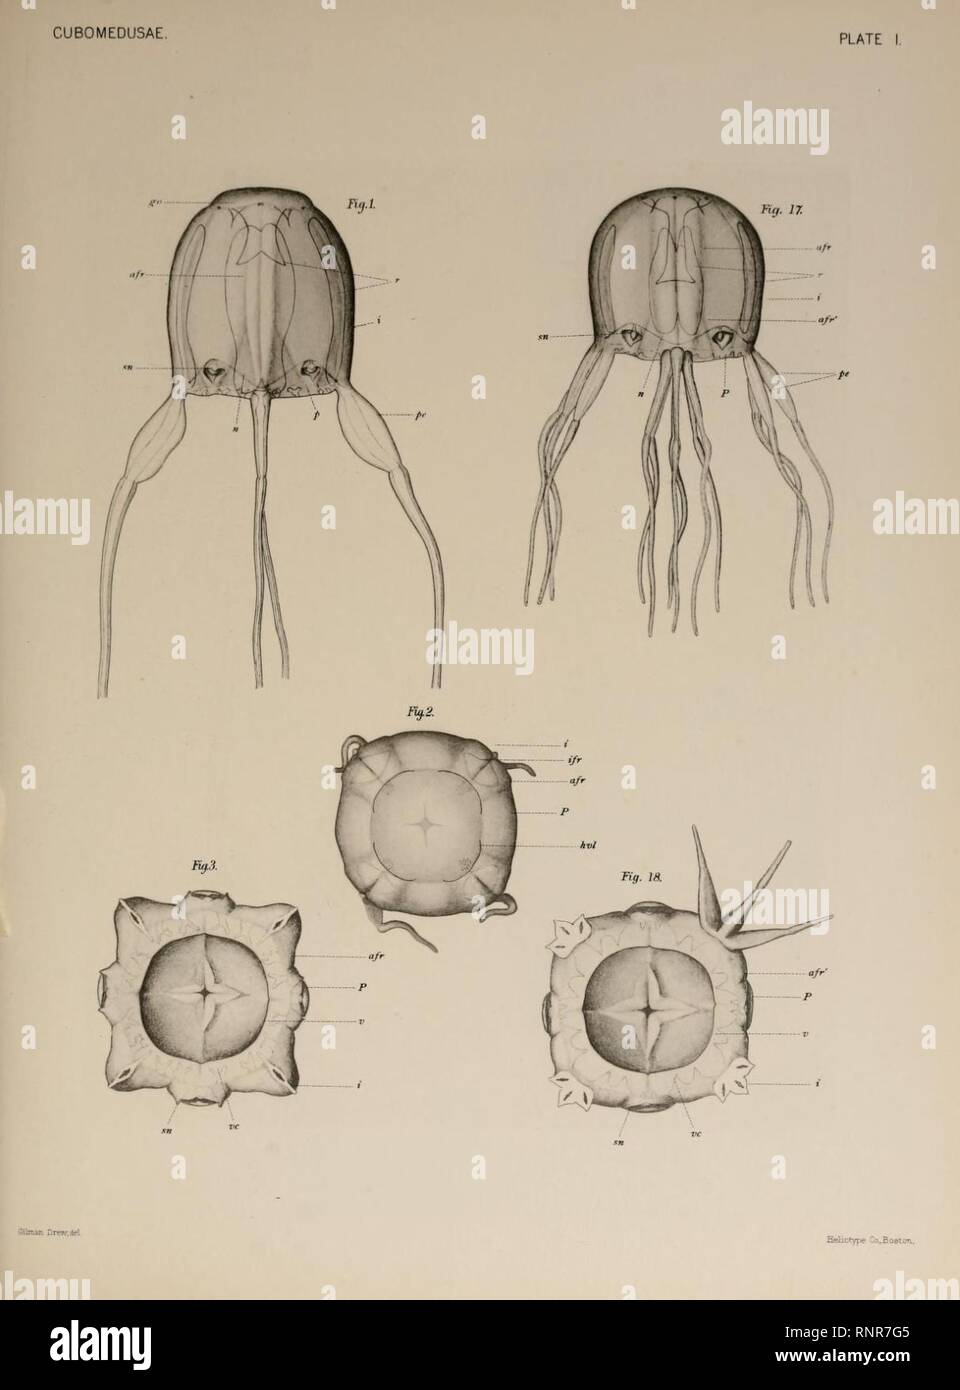 Carybdea xaymacana in Selected morphological monographs - The Cubomedusae (1900). Stock Photo